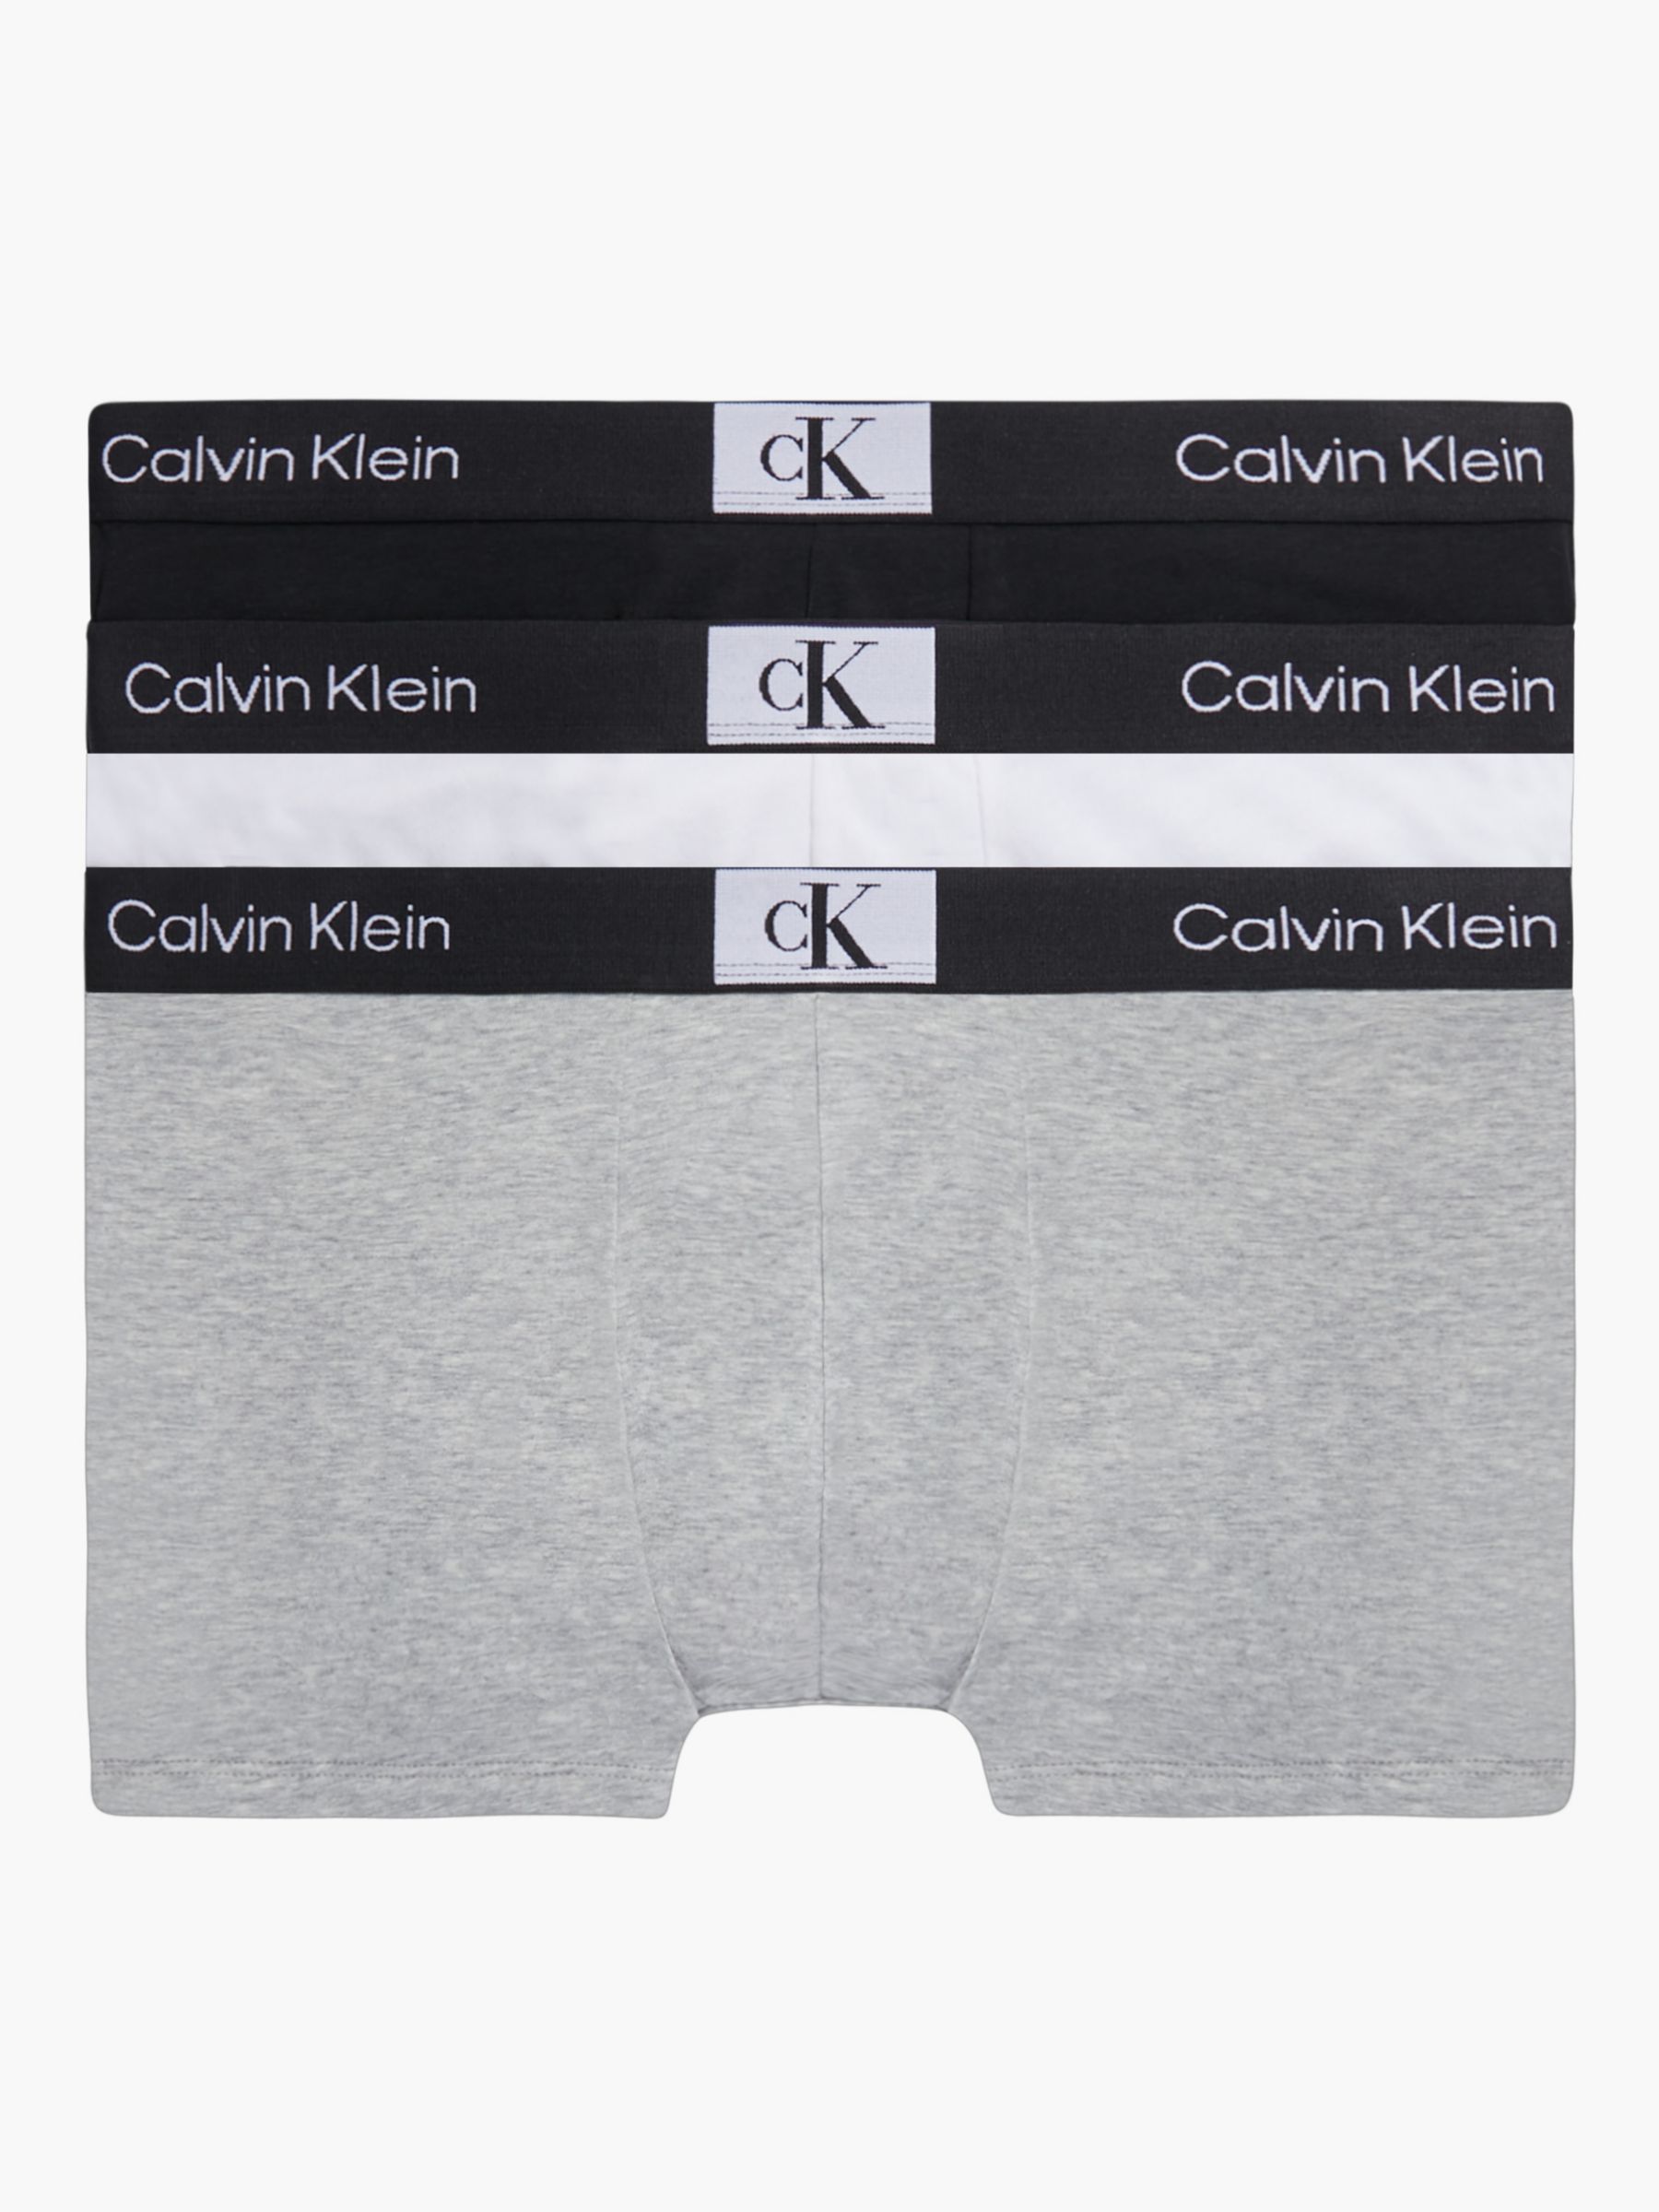 Calvin Klein 1996 Cotton Stretch Trunks, Pack of 3, Black/White/Grey, XS